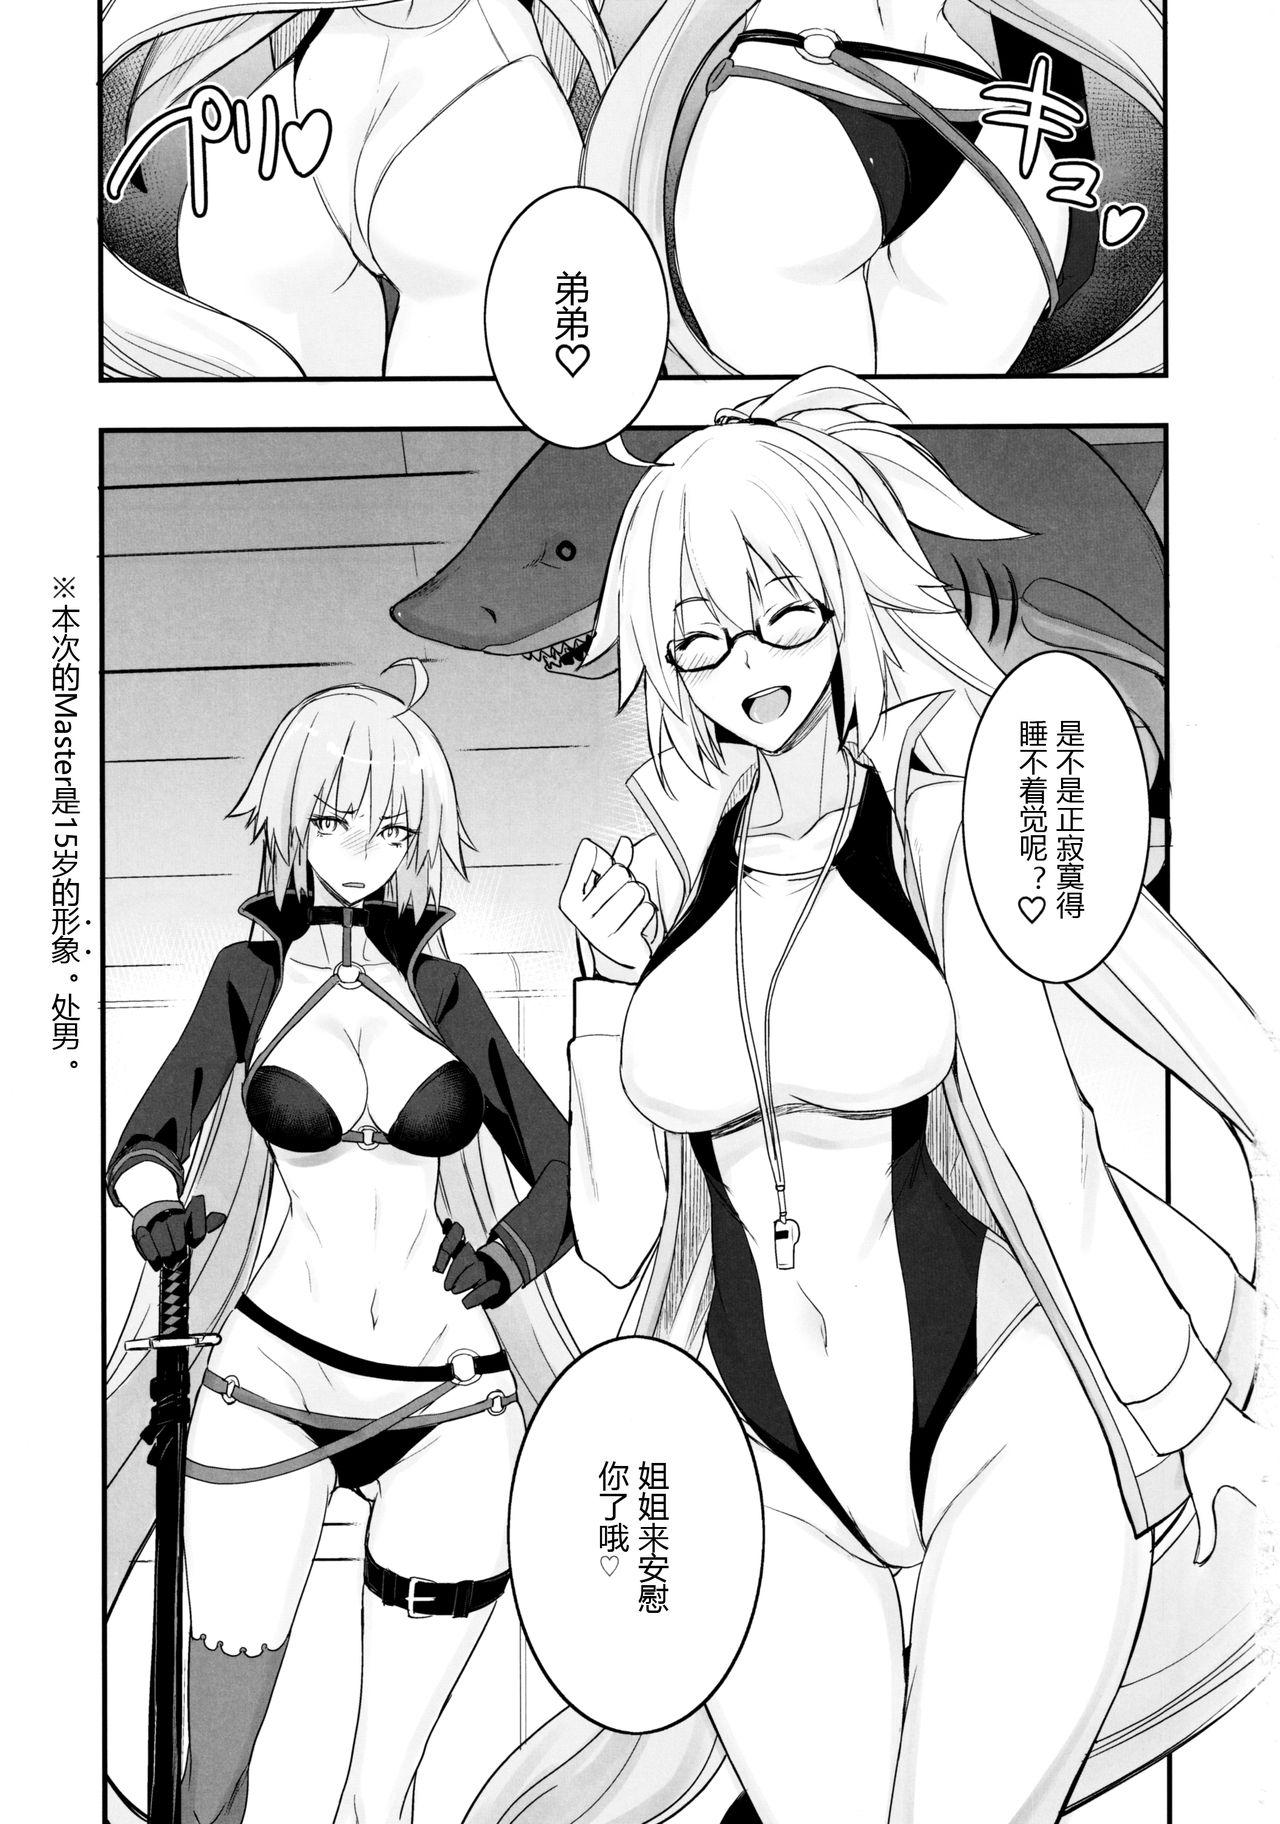 W Jeanne vs Master 2